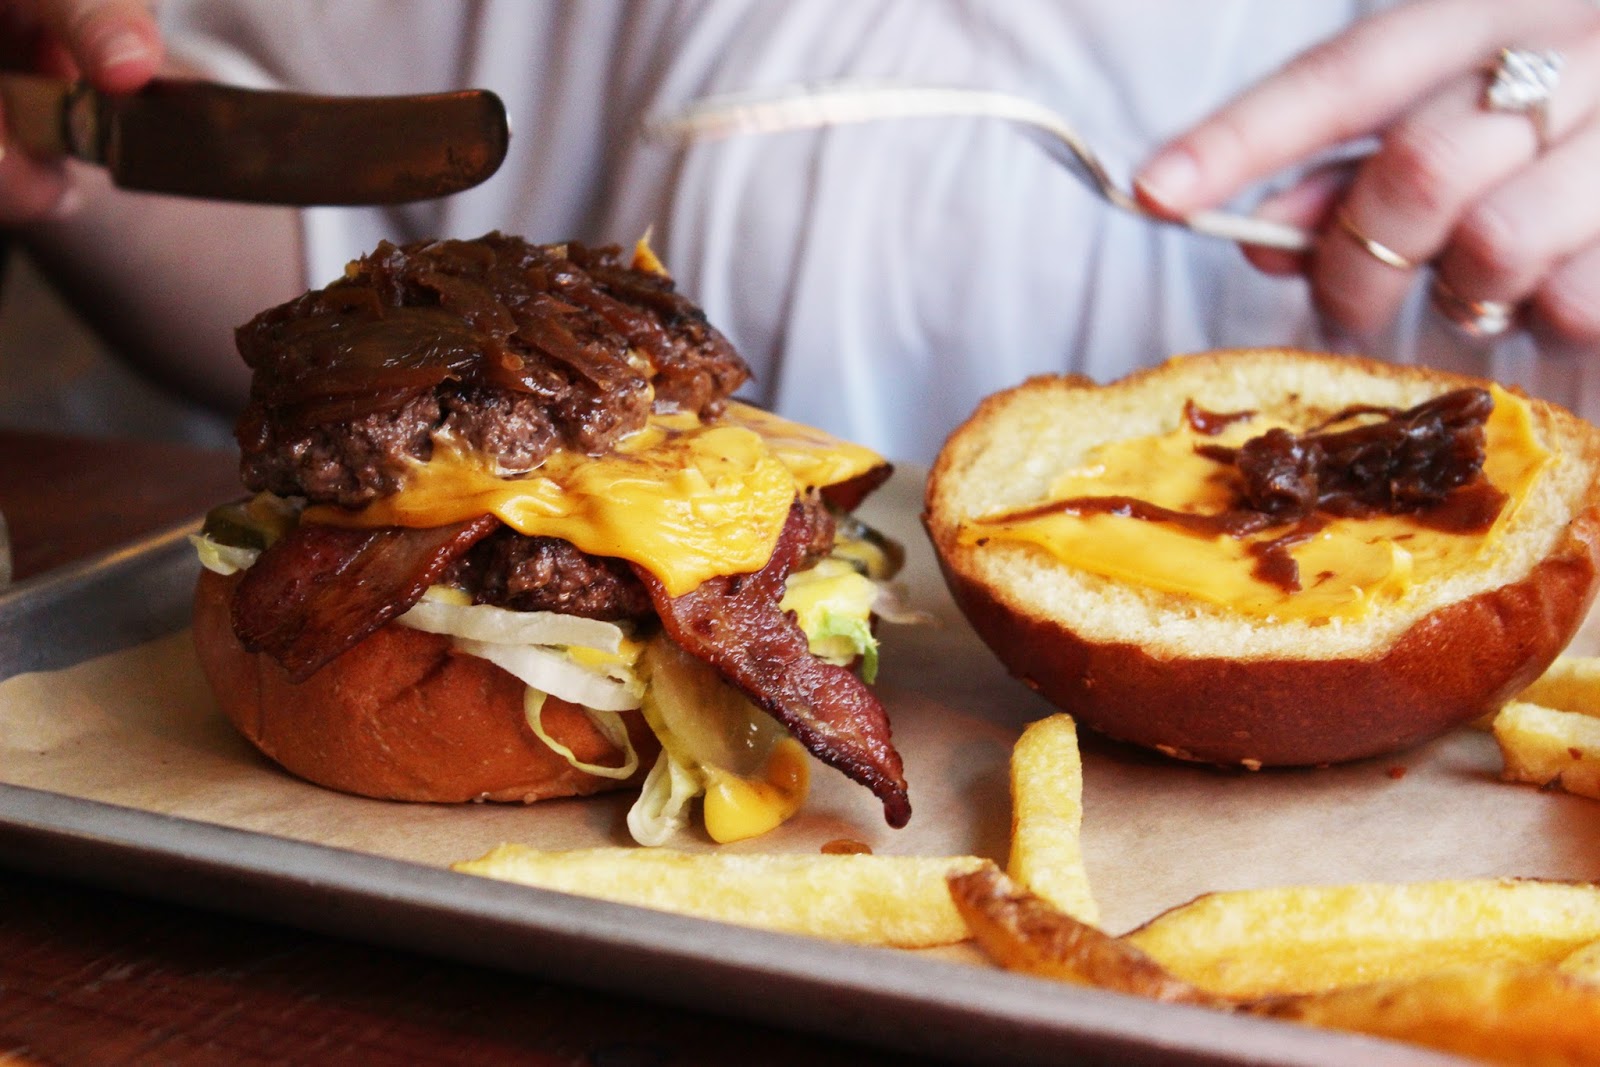 Mac and Wild restaurant review - venimoo burger